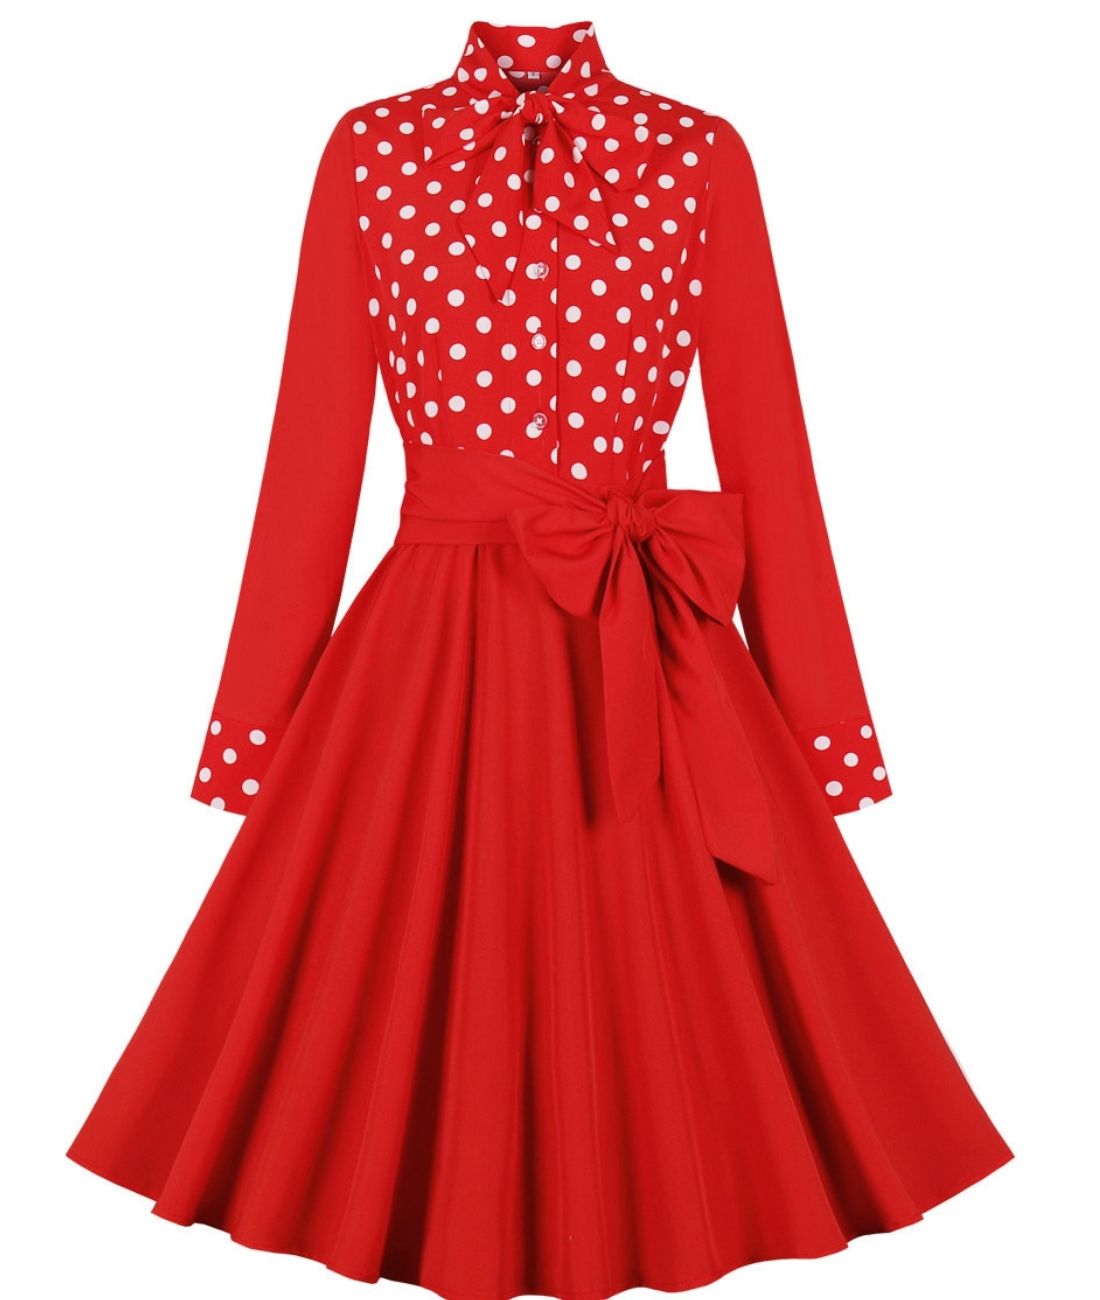 Robe De Mariée Pin Up Rouge - Madame Vintage